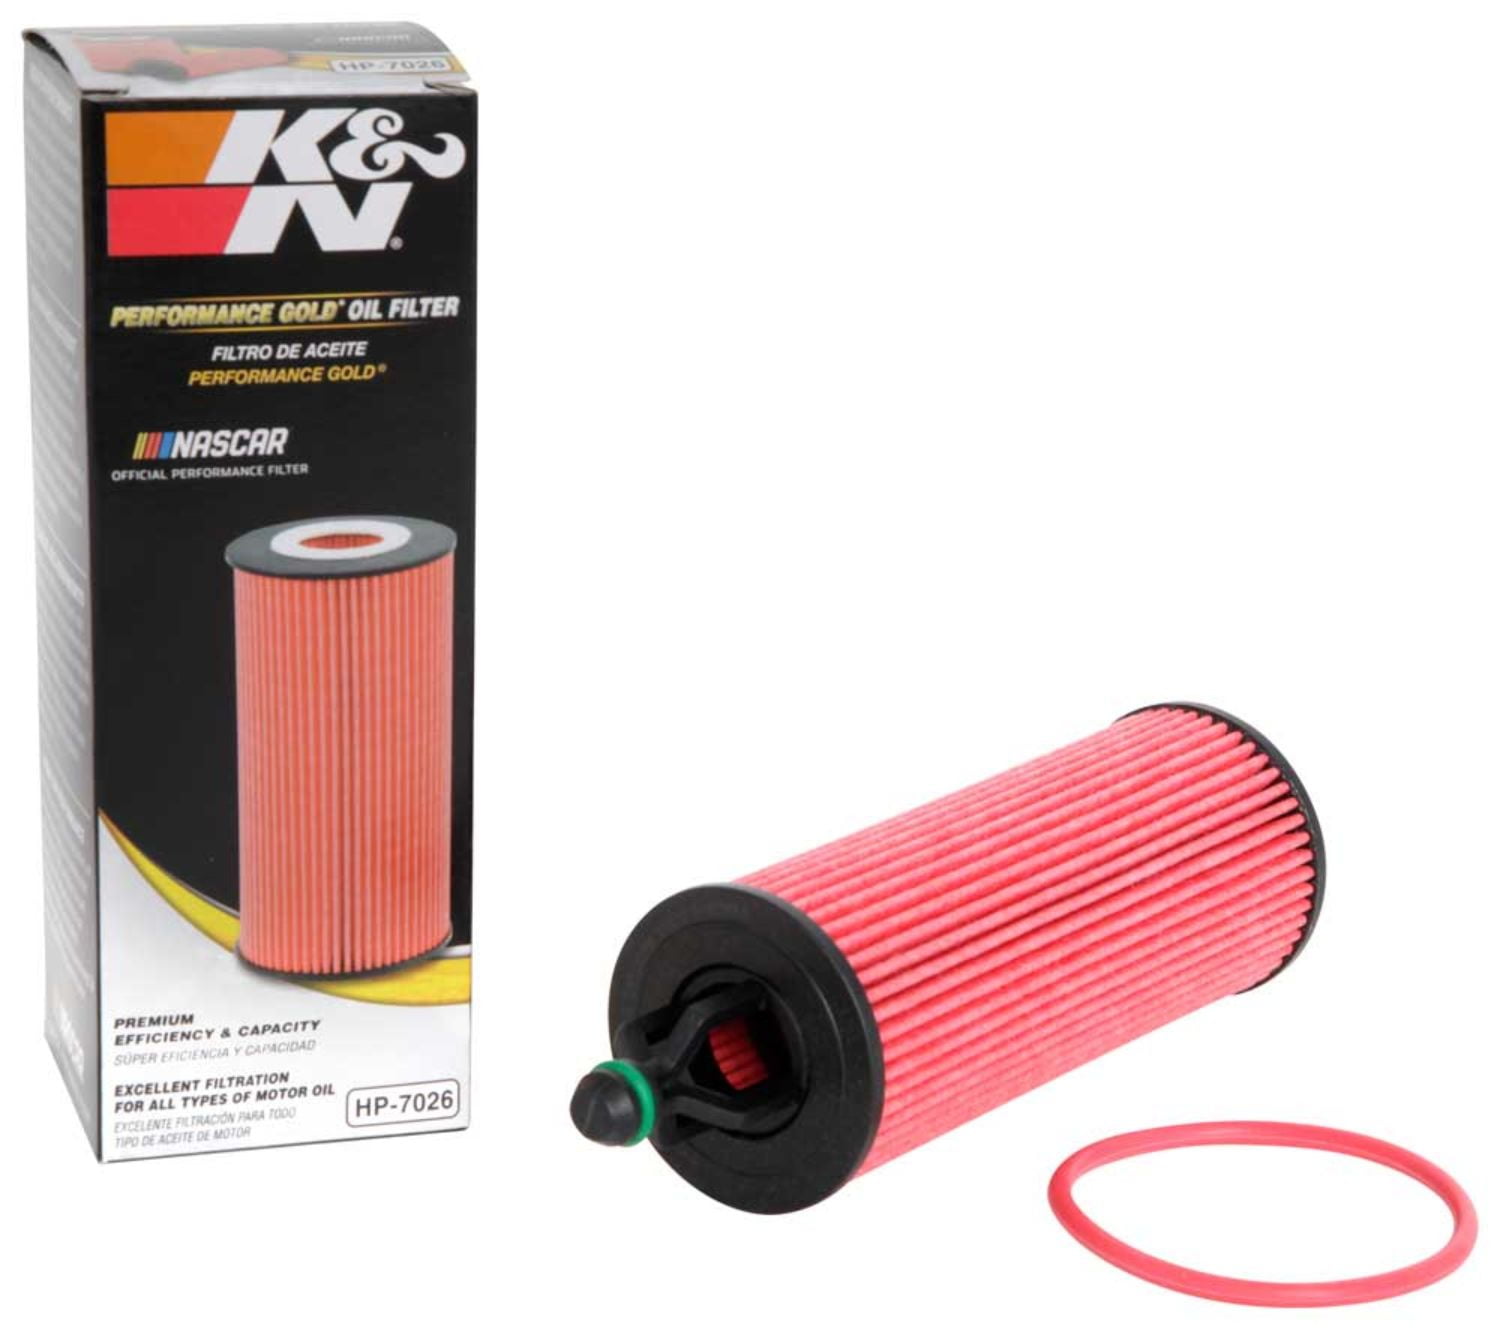 K&n filters filtro aceite filtro Filtro oil ps-7026 